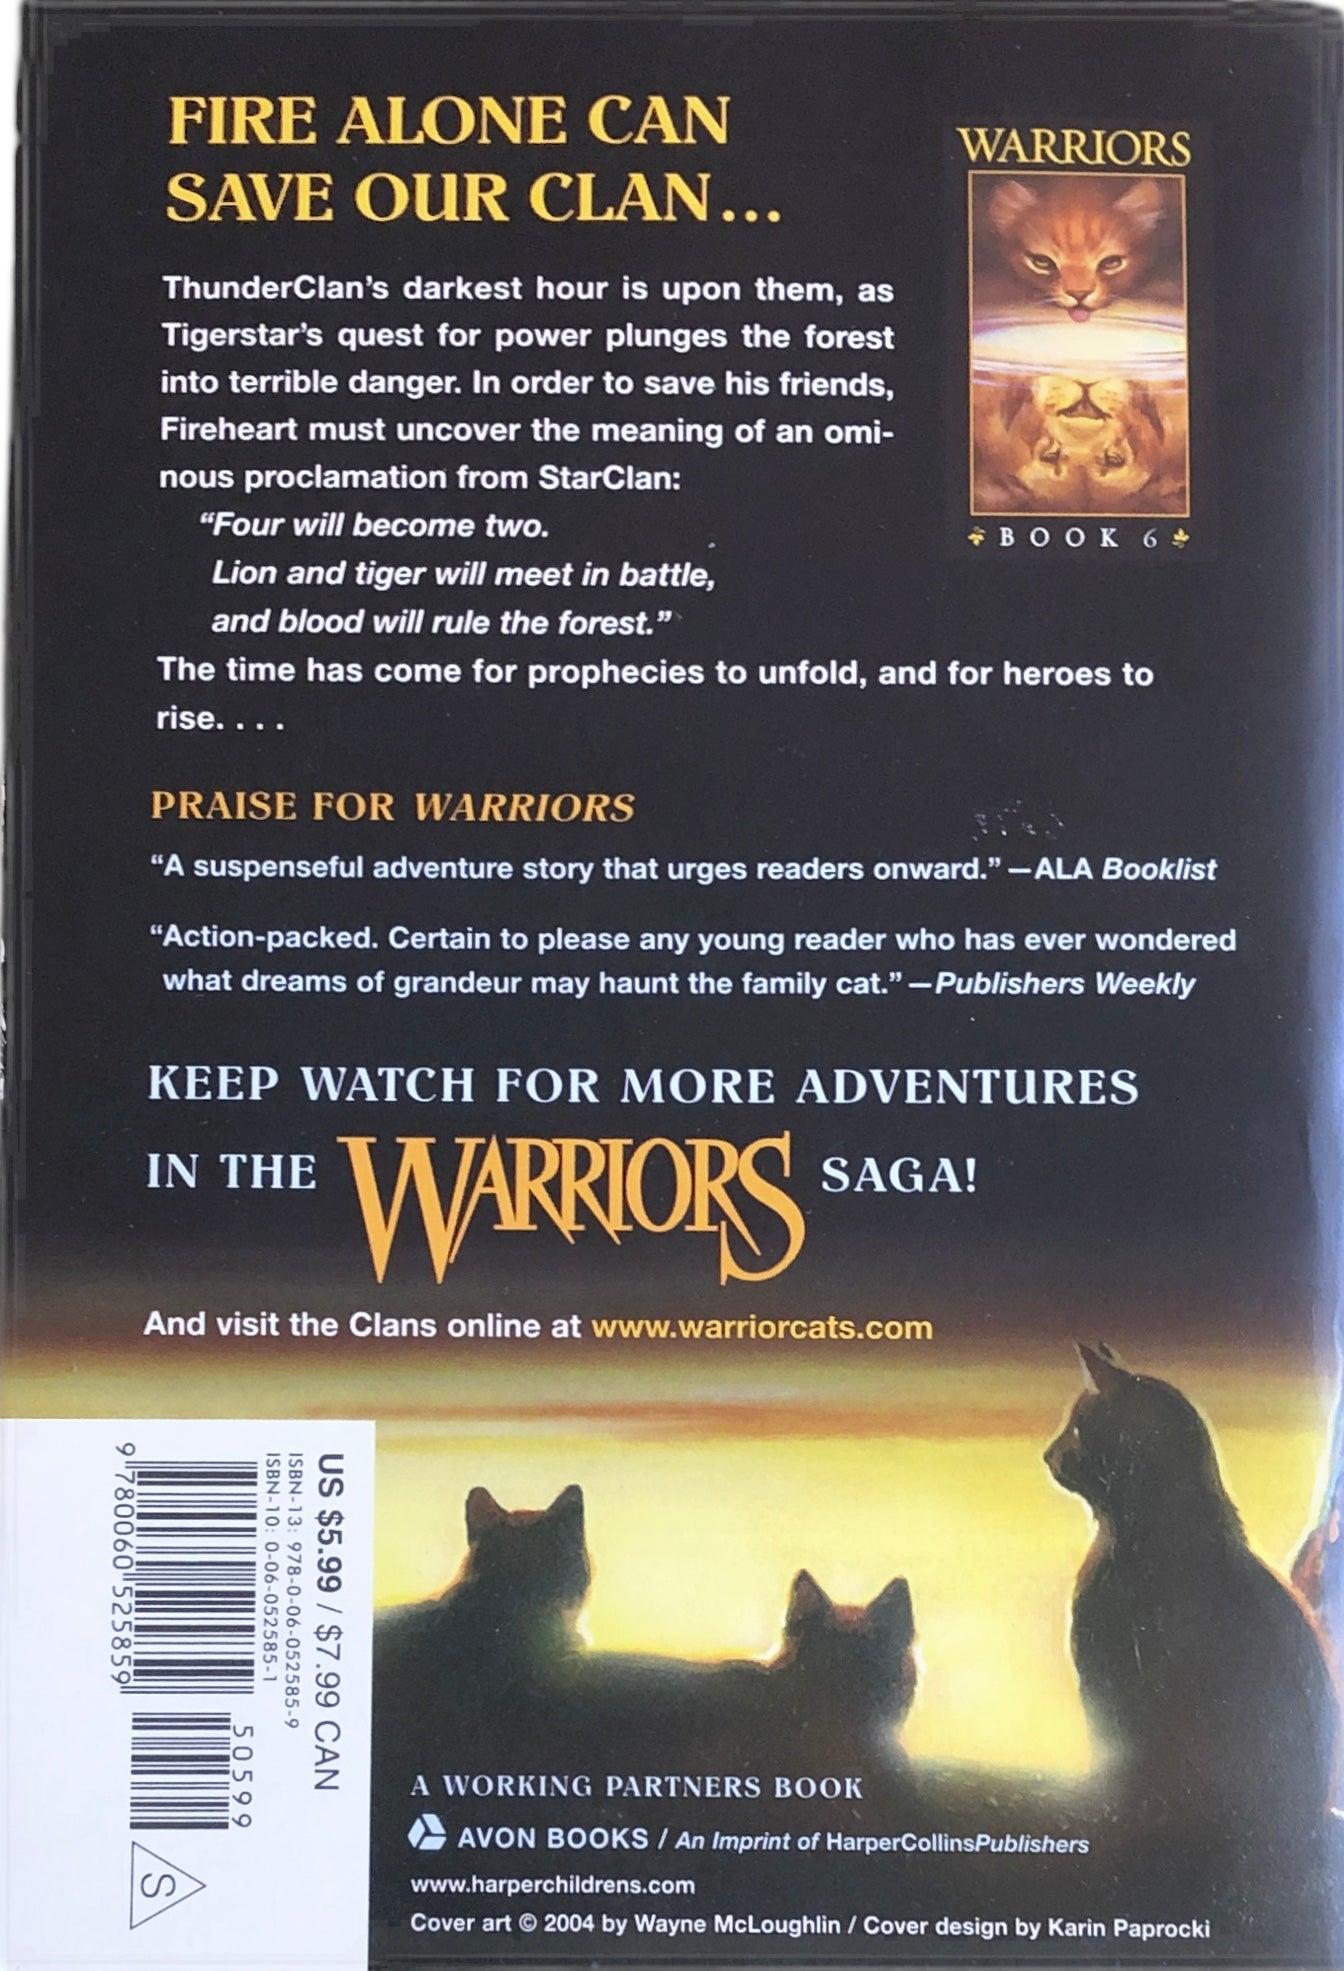 Warriors: The Darkest Hour (The Prophecies Begin Book #6) by Erin Hunter